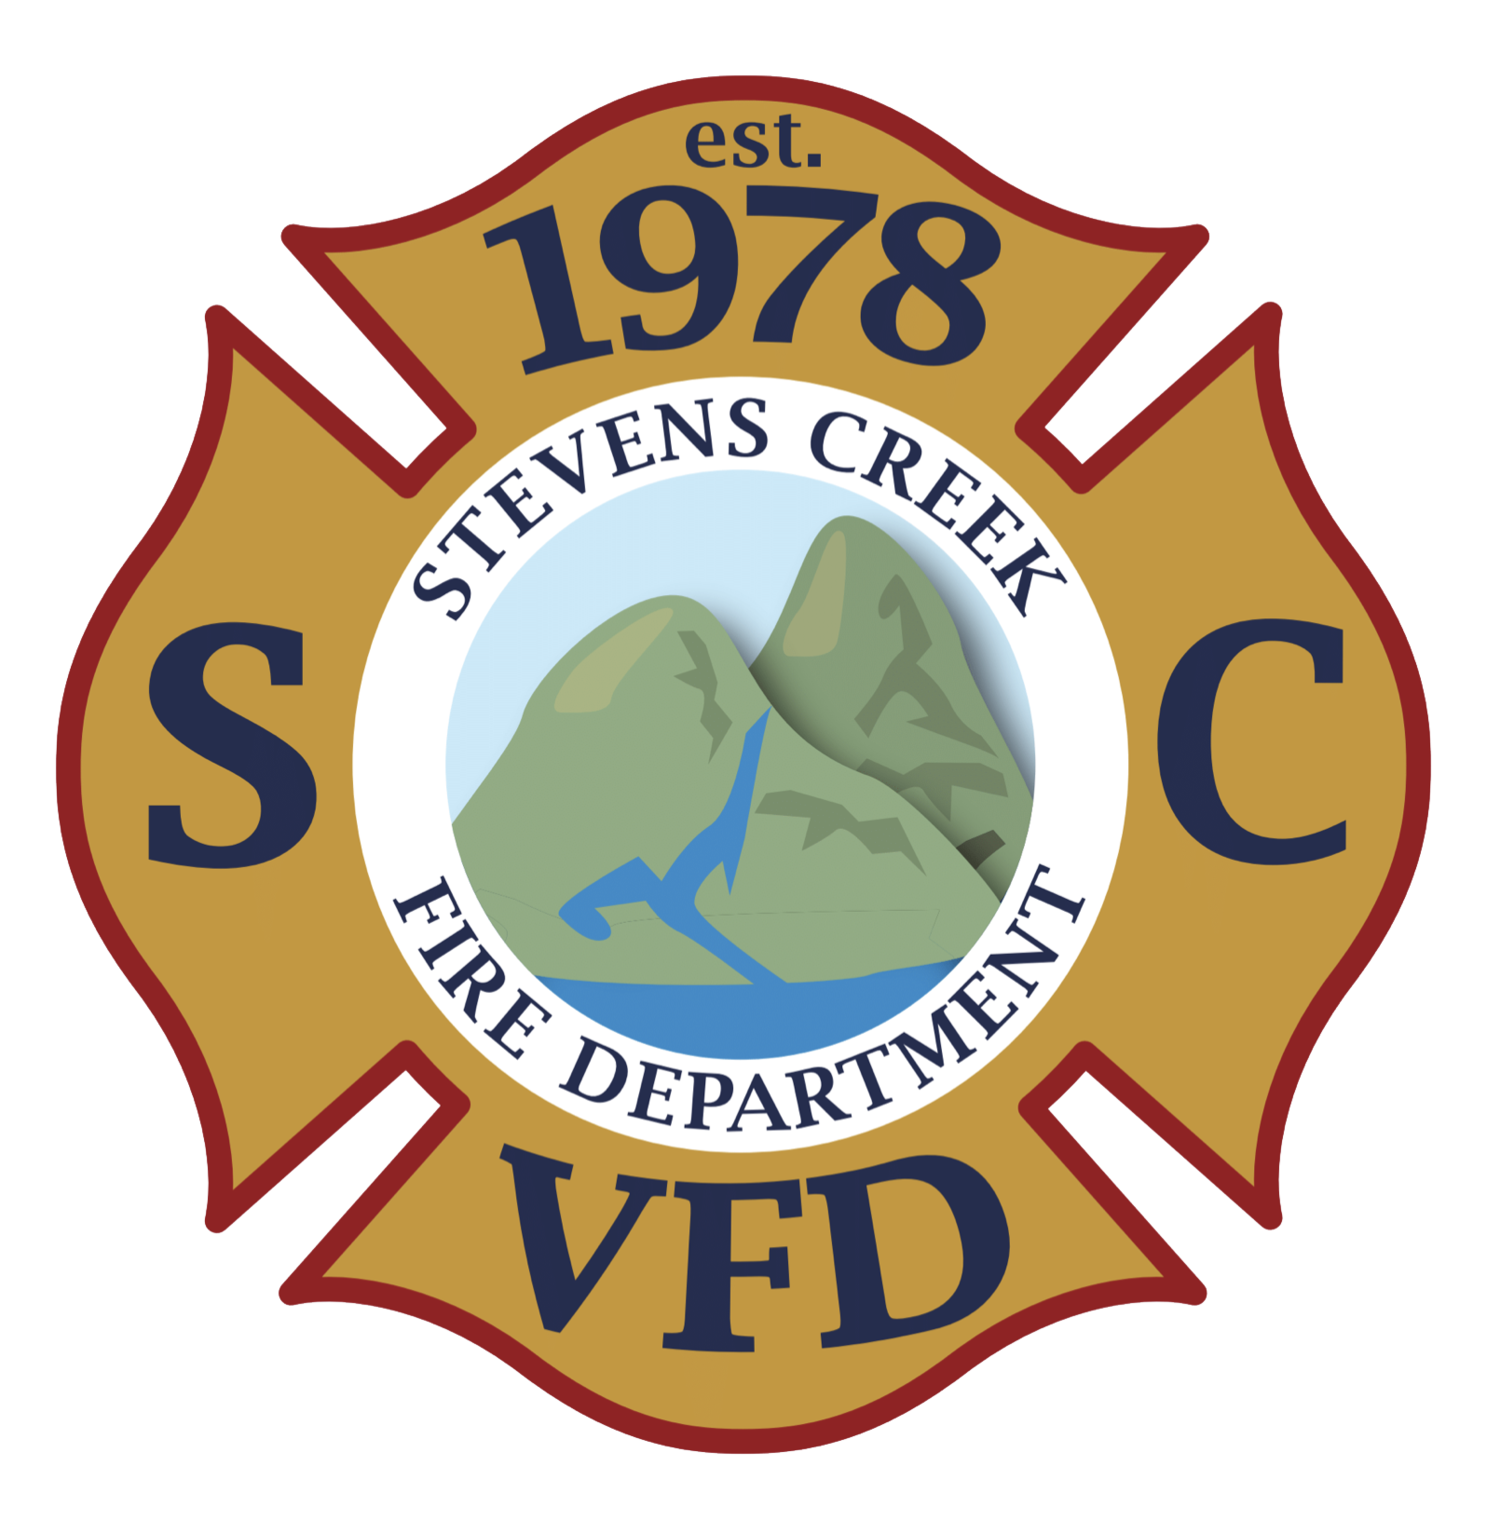 Stevens Creek Volunteer Fire Department